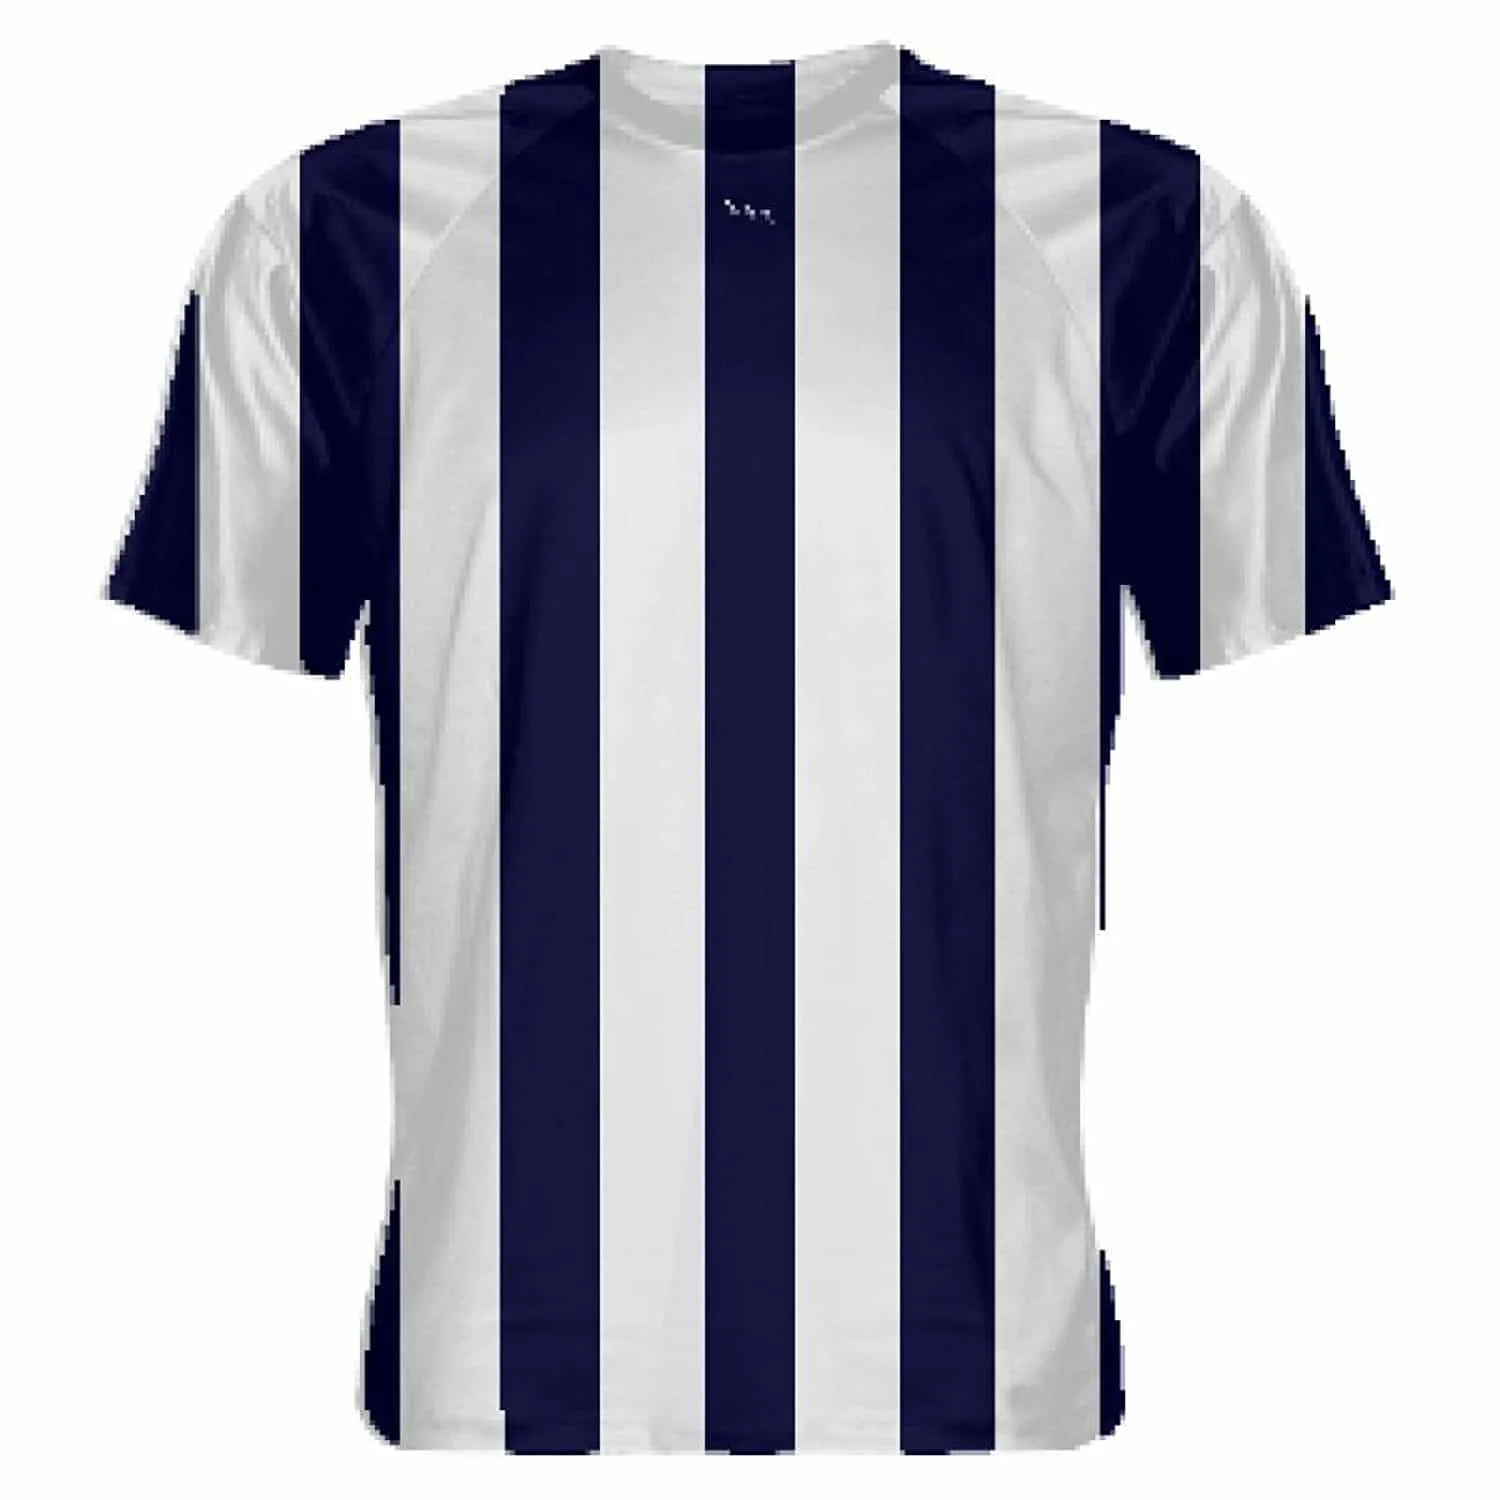 Sky Blue and Navy Blue Plain Soccer - Buy Jersey Design